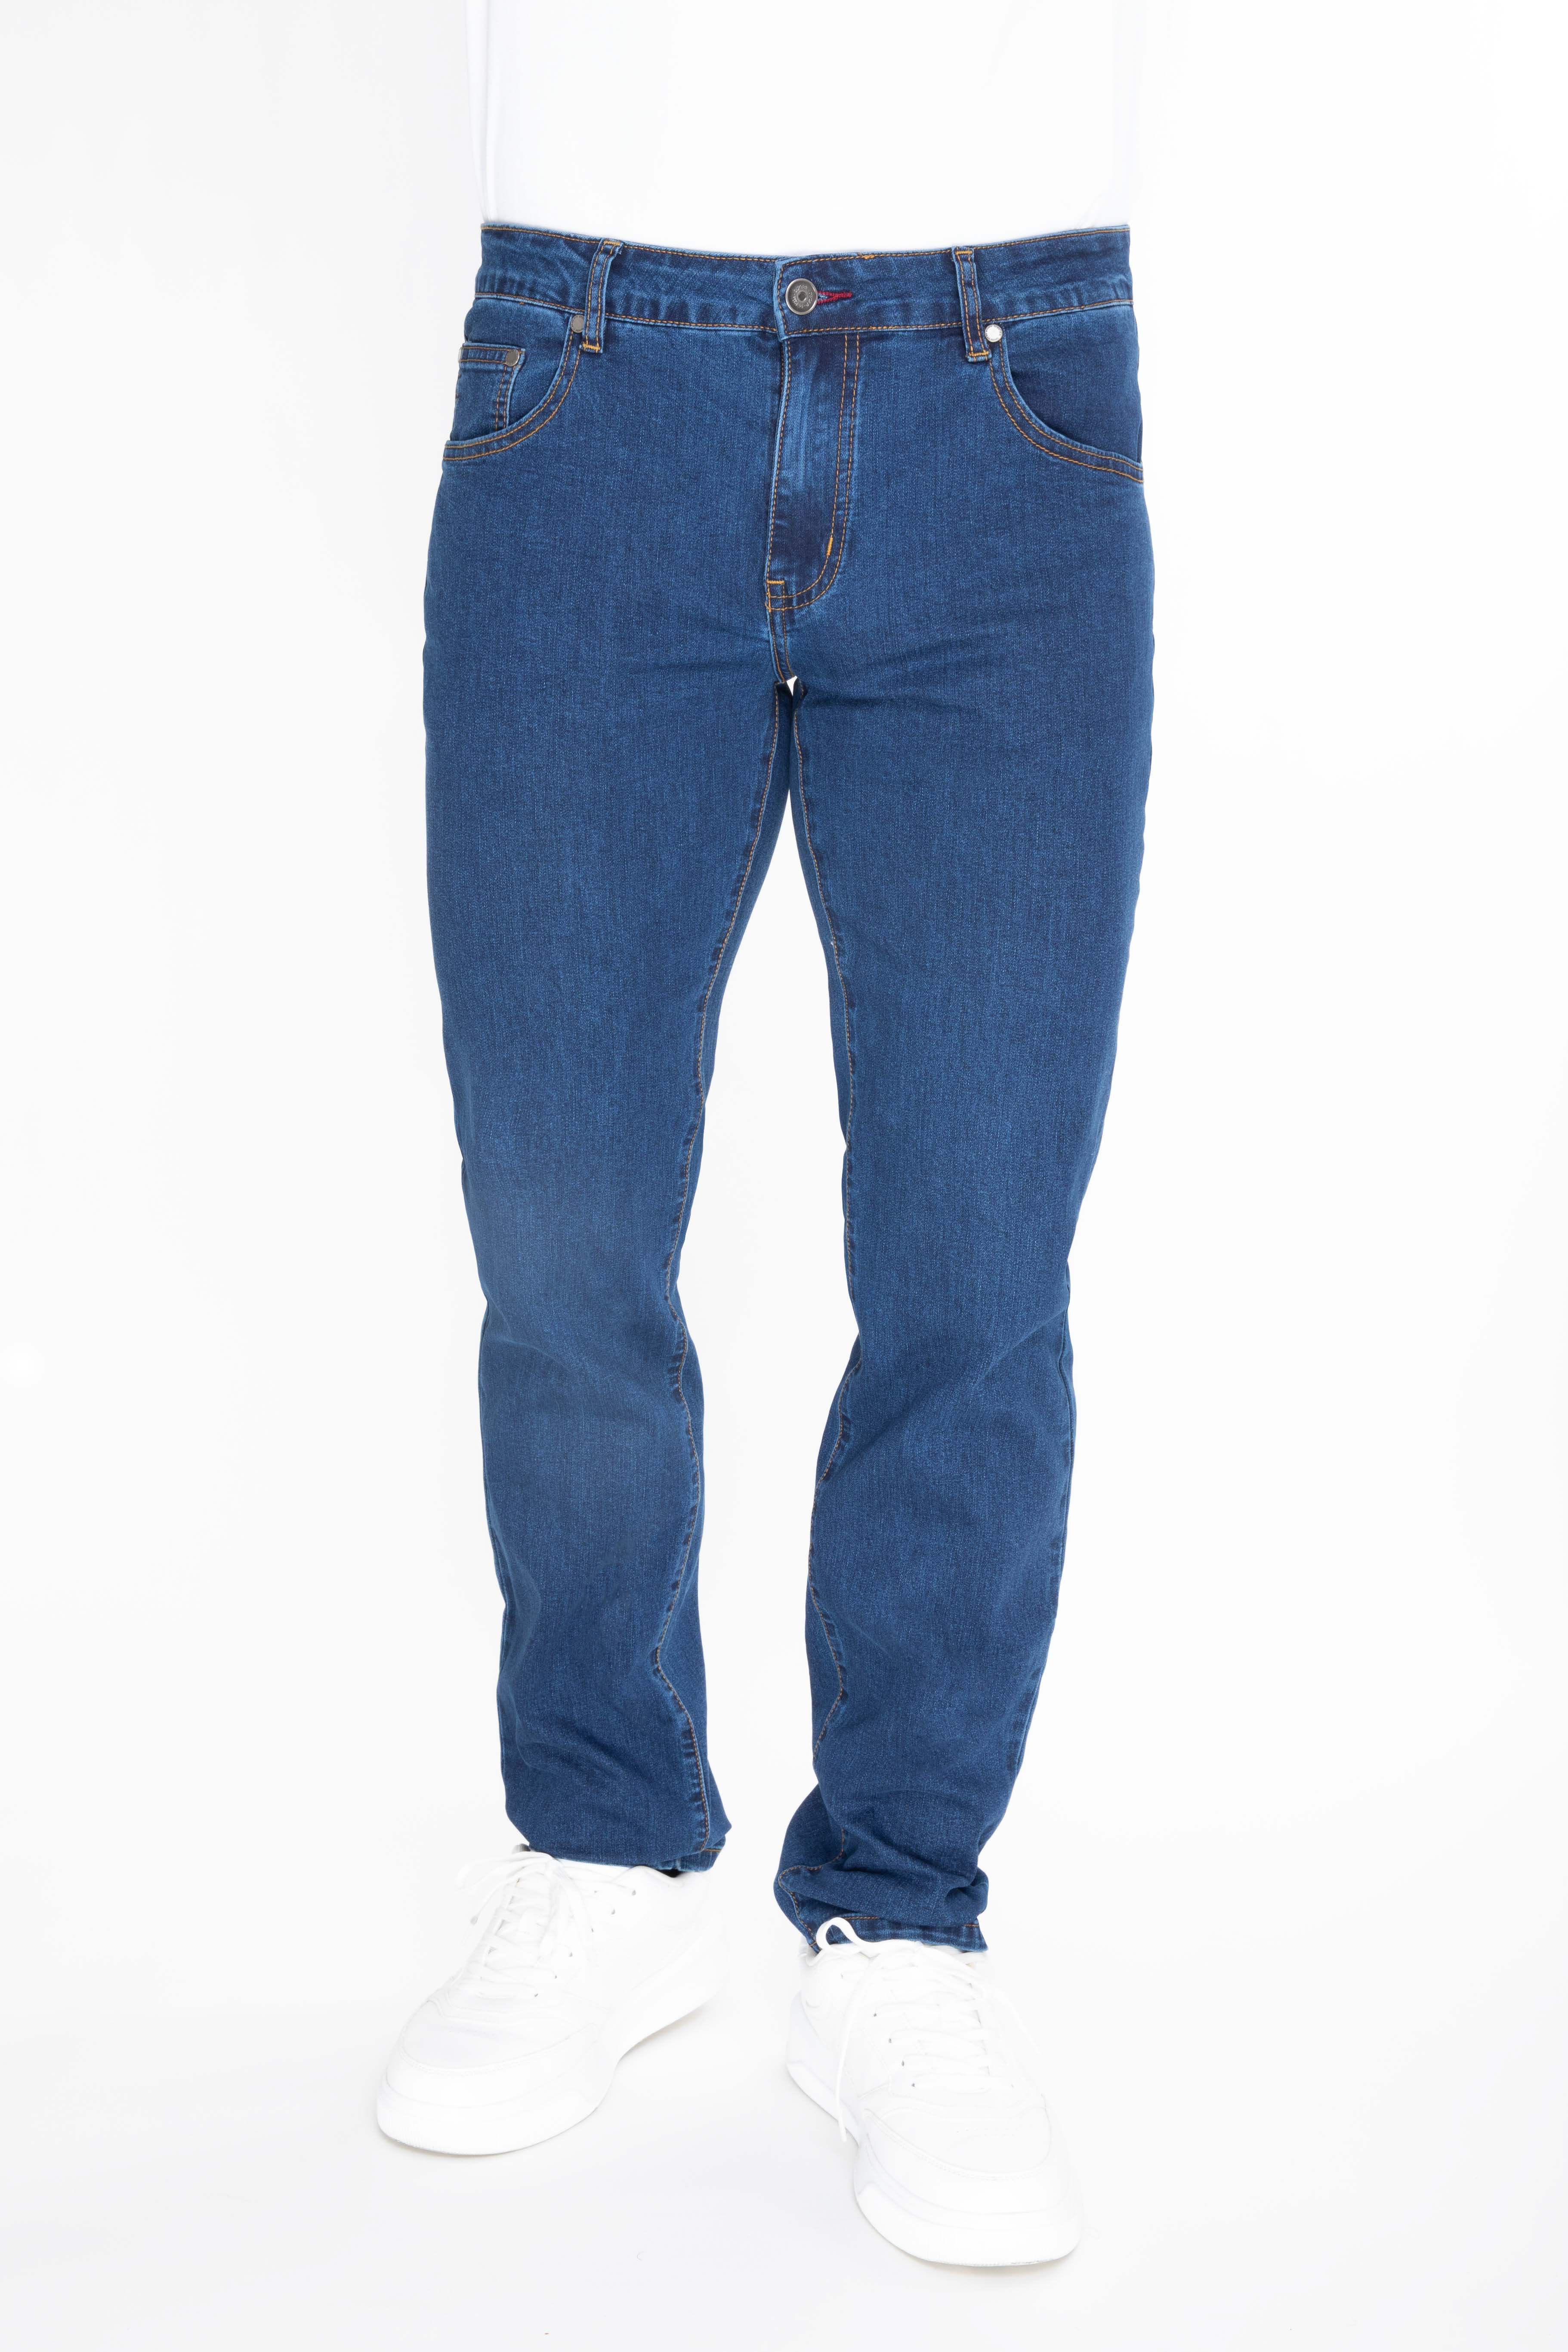 pantalon-jeans-oscar-p-caballeros-1